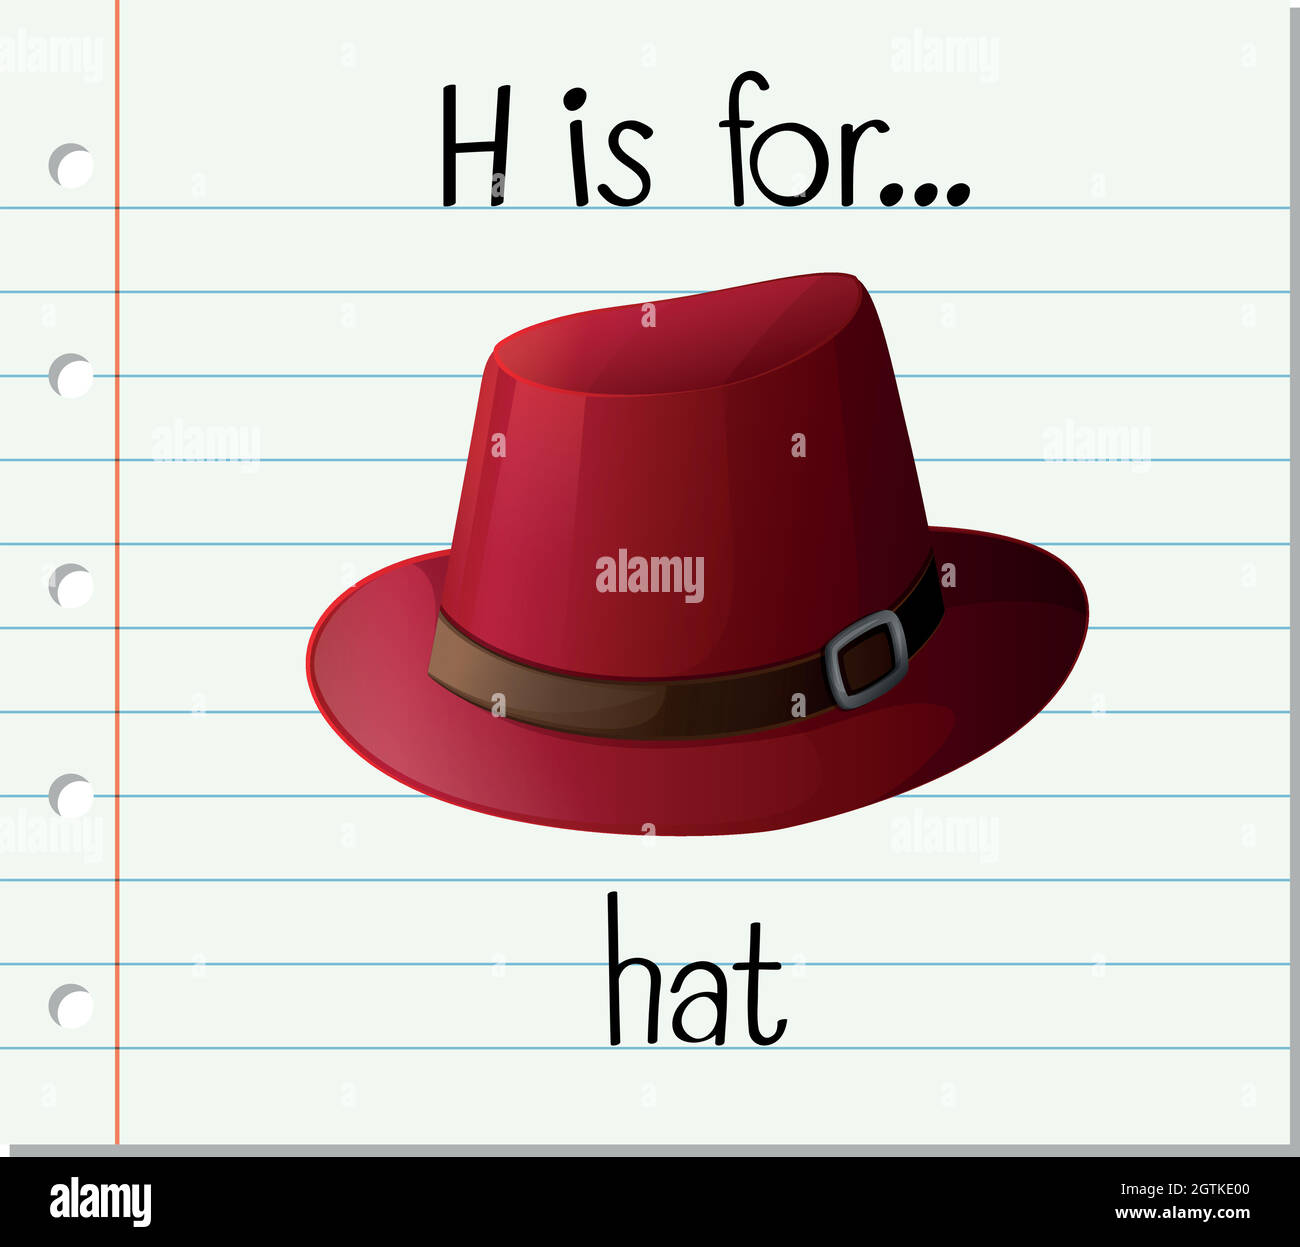 H hat. Шляпа английски. Карточка шляпа на английском. Что такое по английскому hat. Шляпа на английском языке для детей.